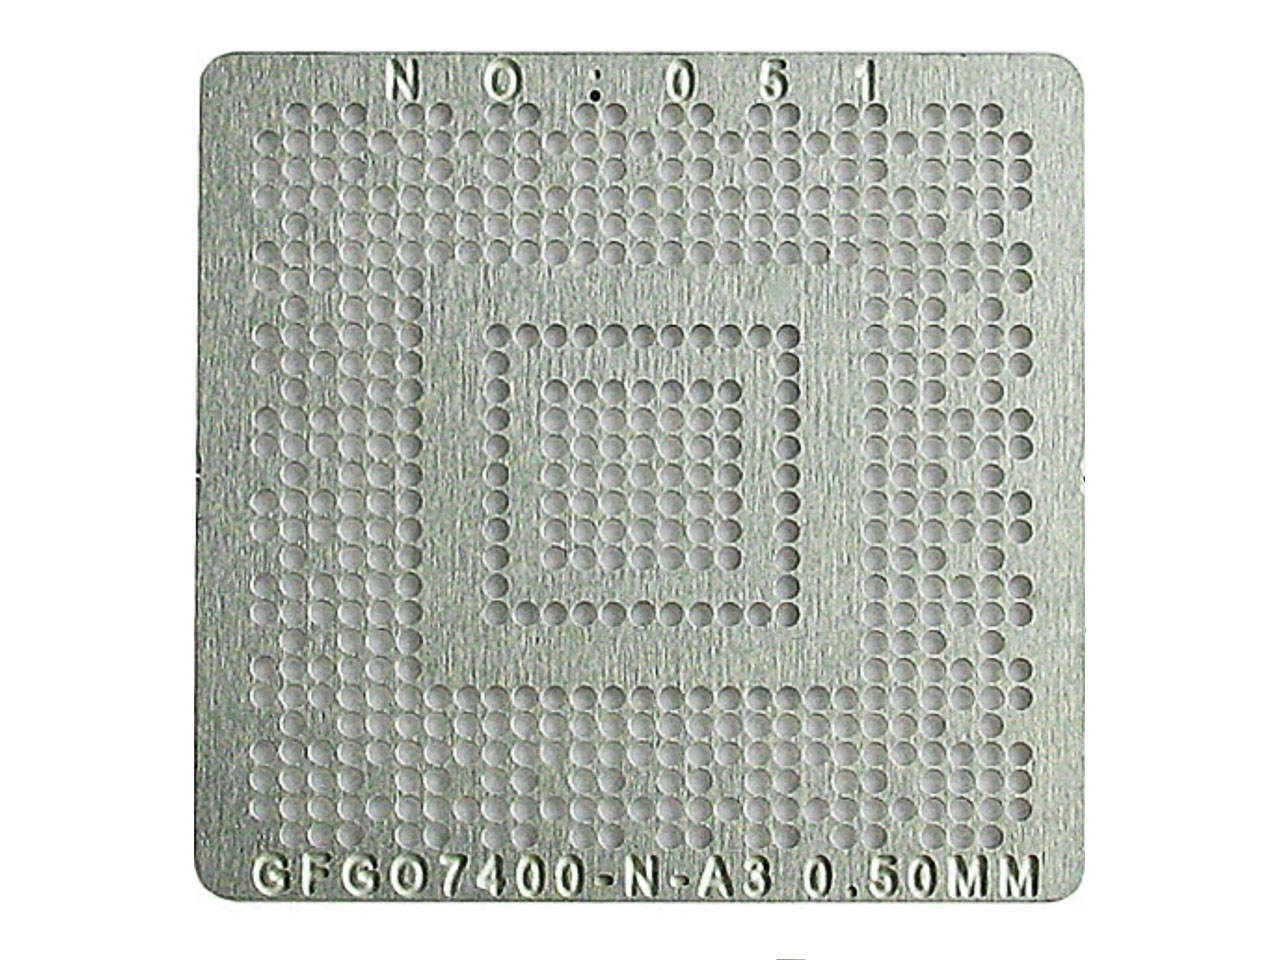 Sito BGA NVidia GF-Go7400-N-A3